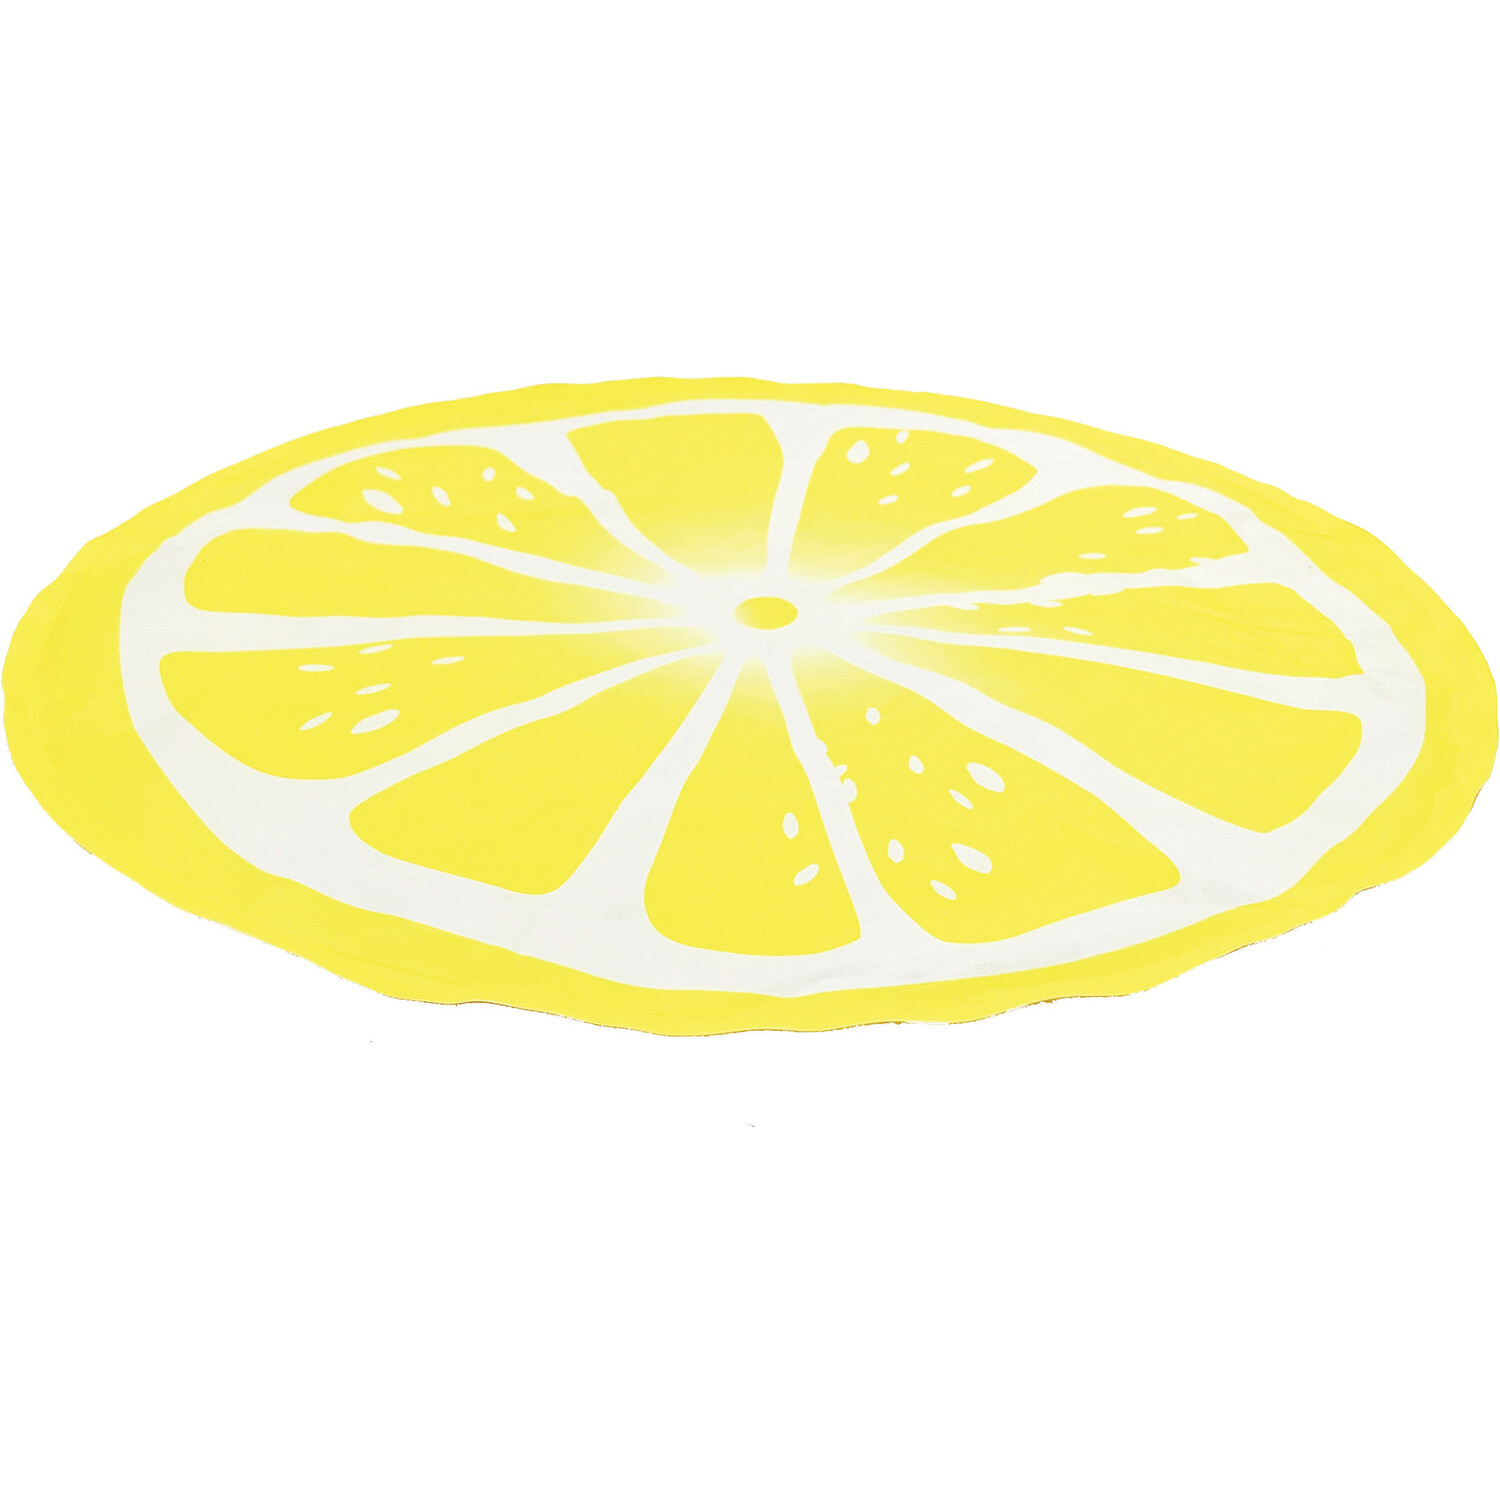 Fruit Pet Cooling Mat - Lemon Image 4